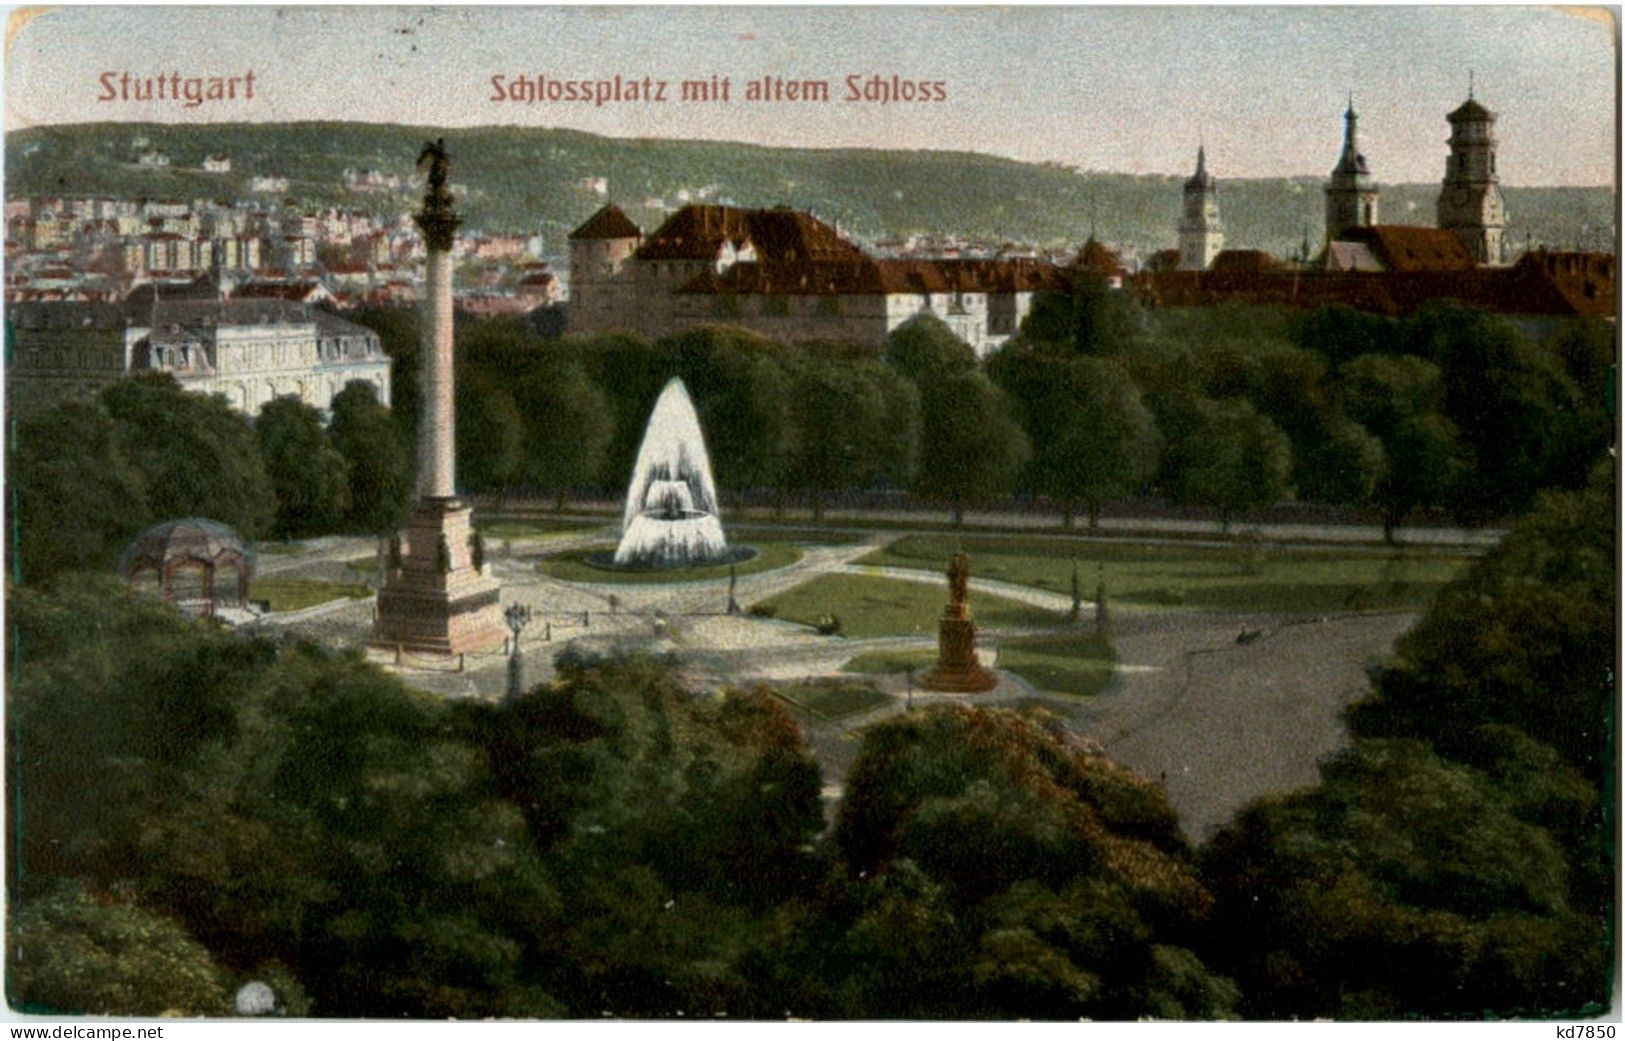 Stuttgart - Schlossplatz - Stuttgart